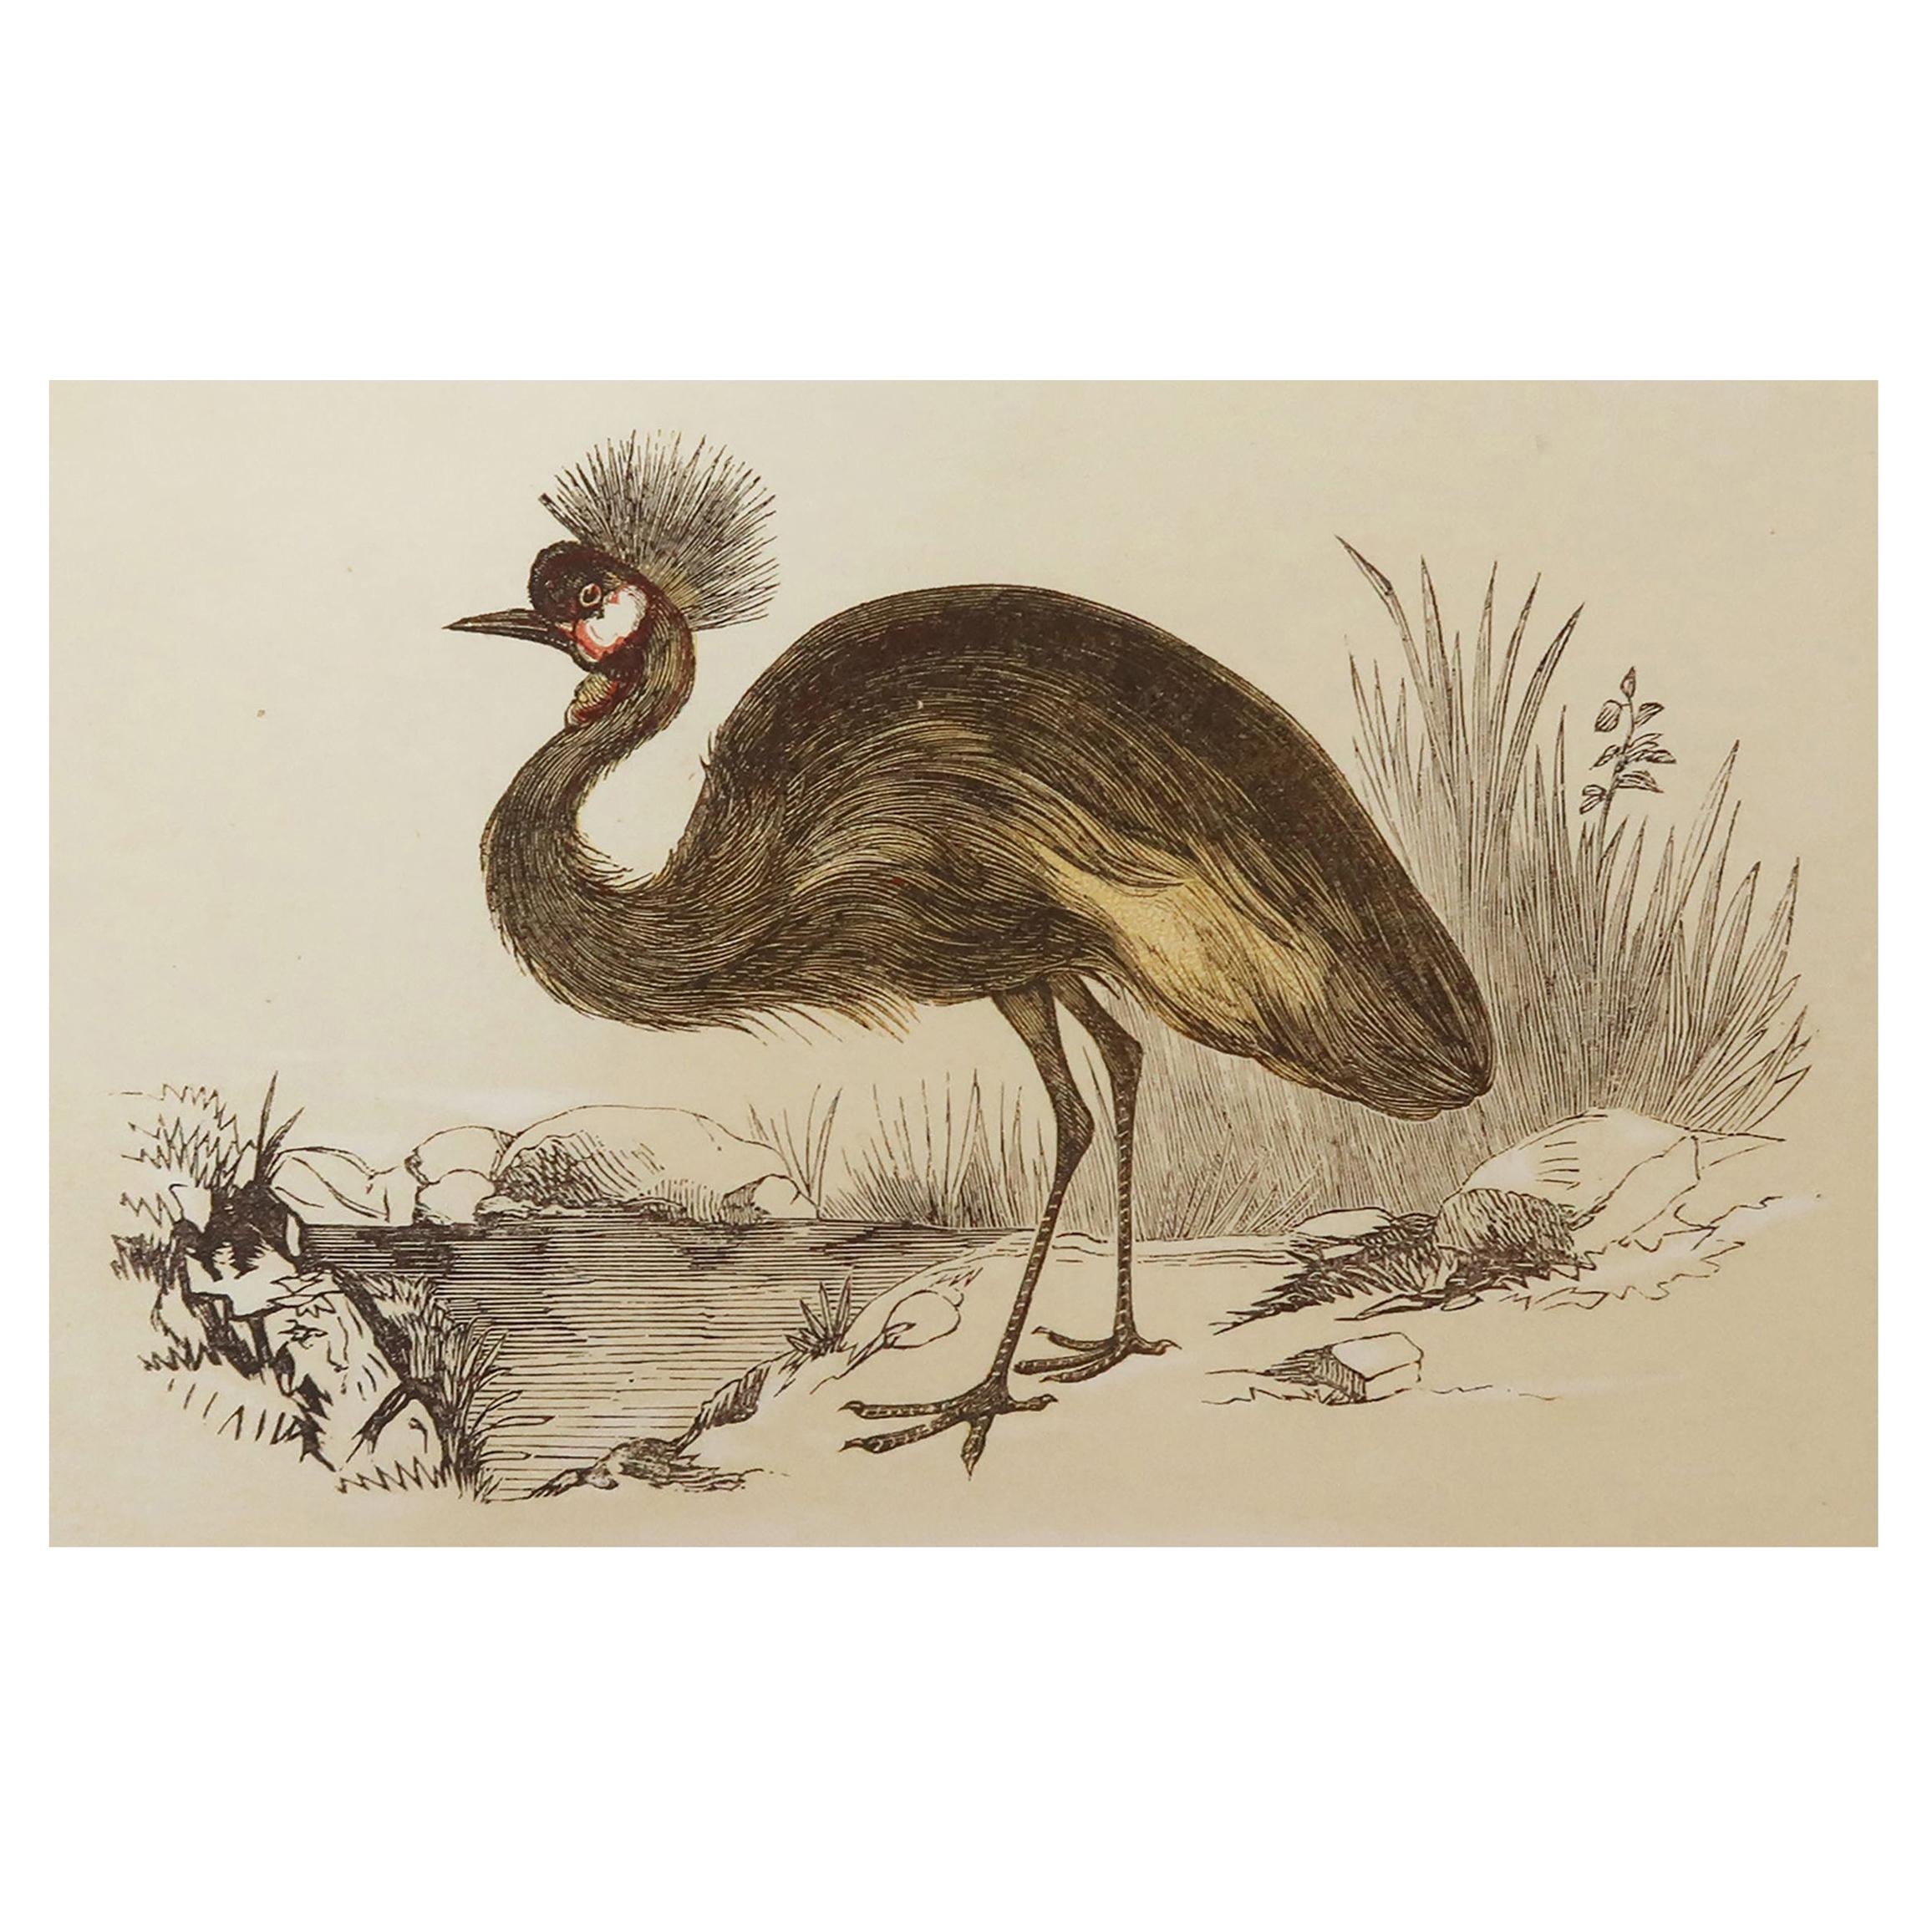 Original Antique Bird Print, the Balearic Crane, Tallis, circa 1850